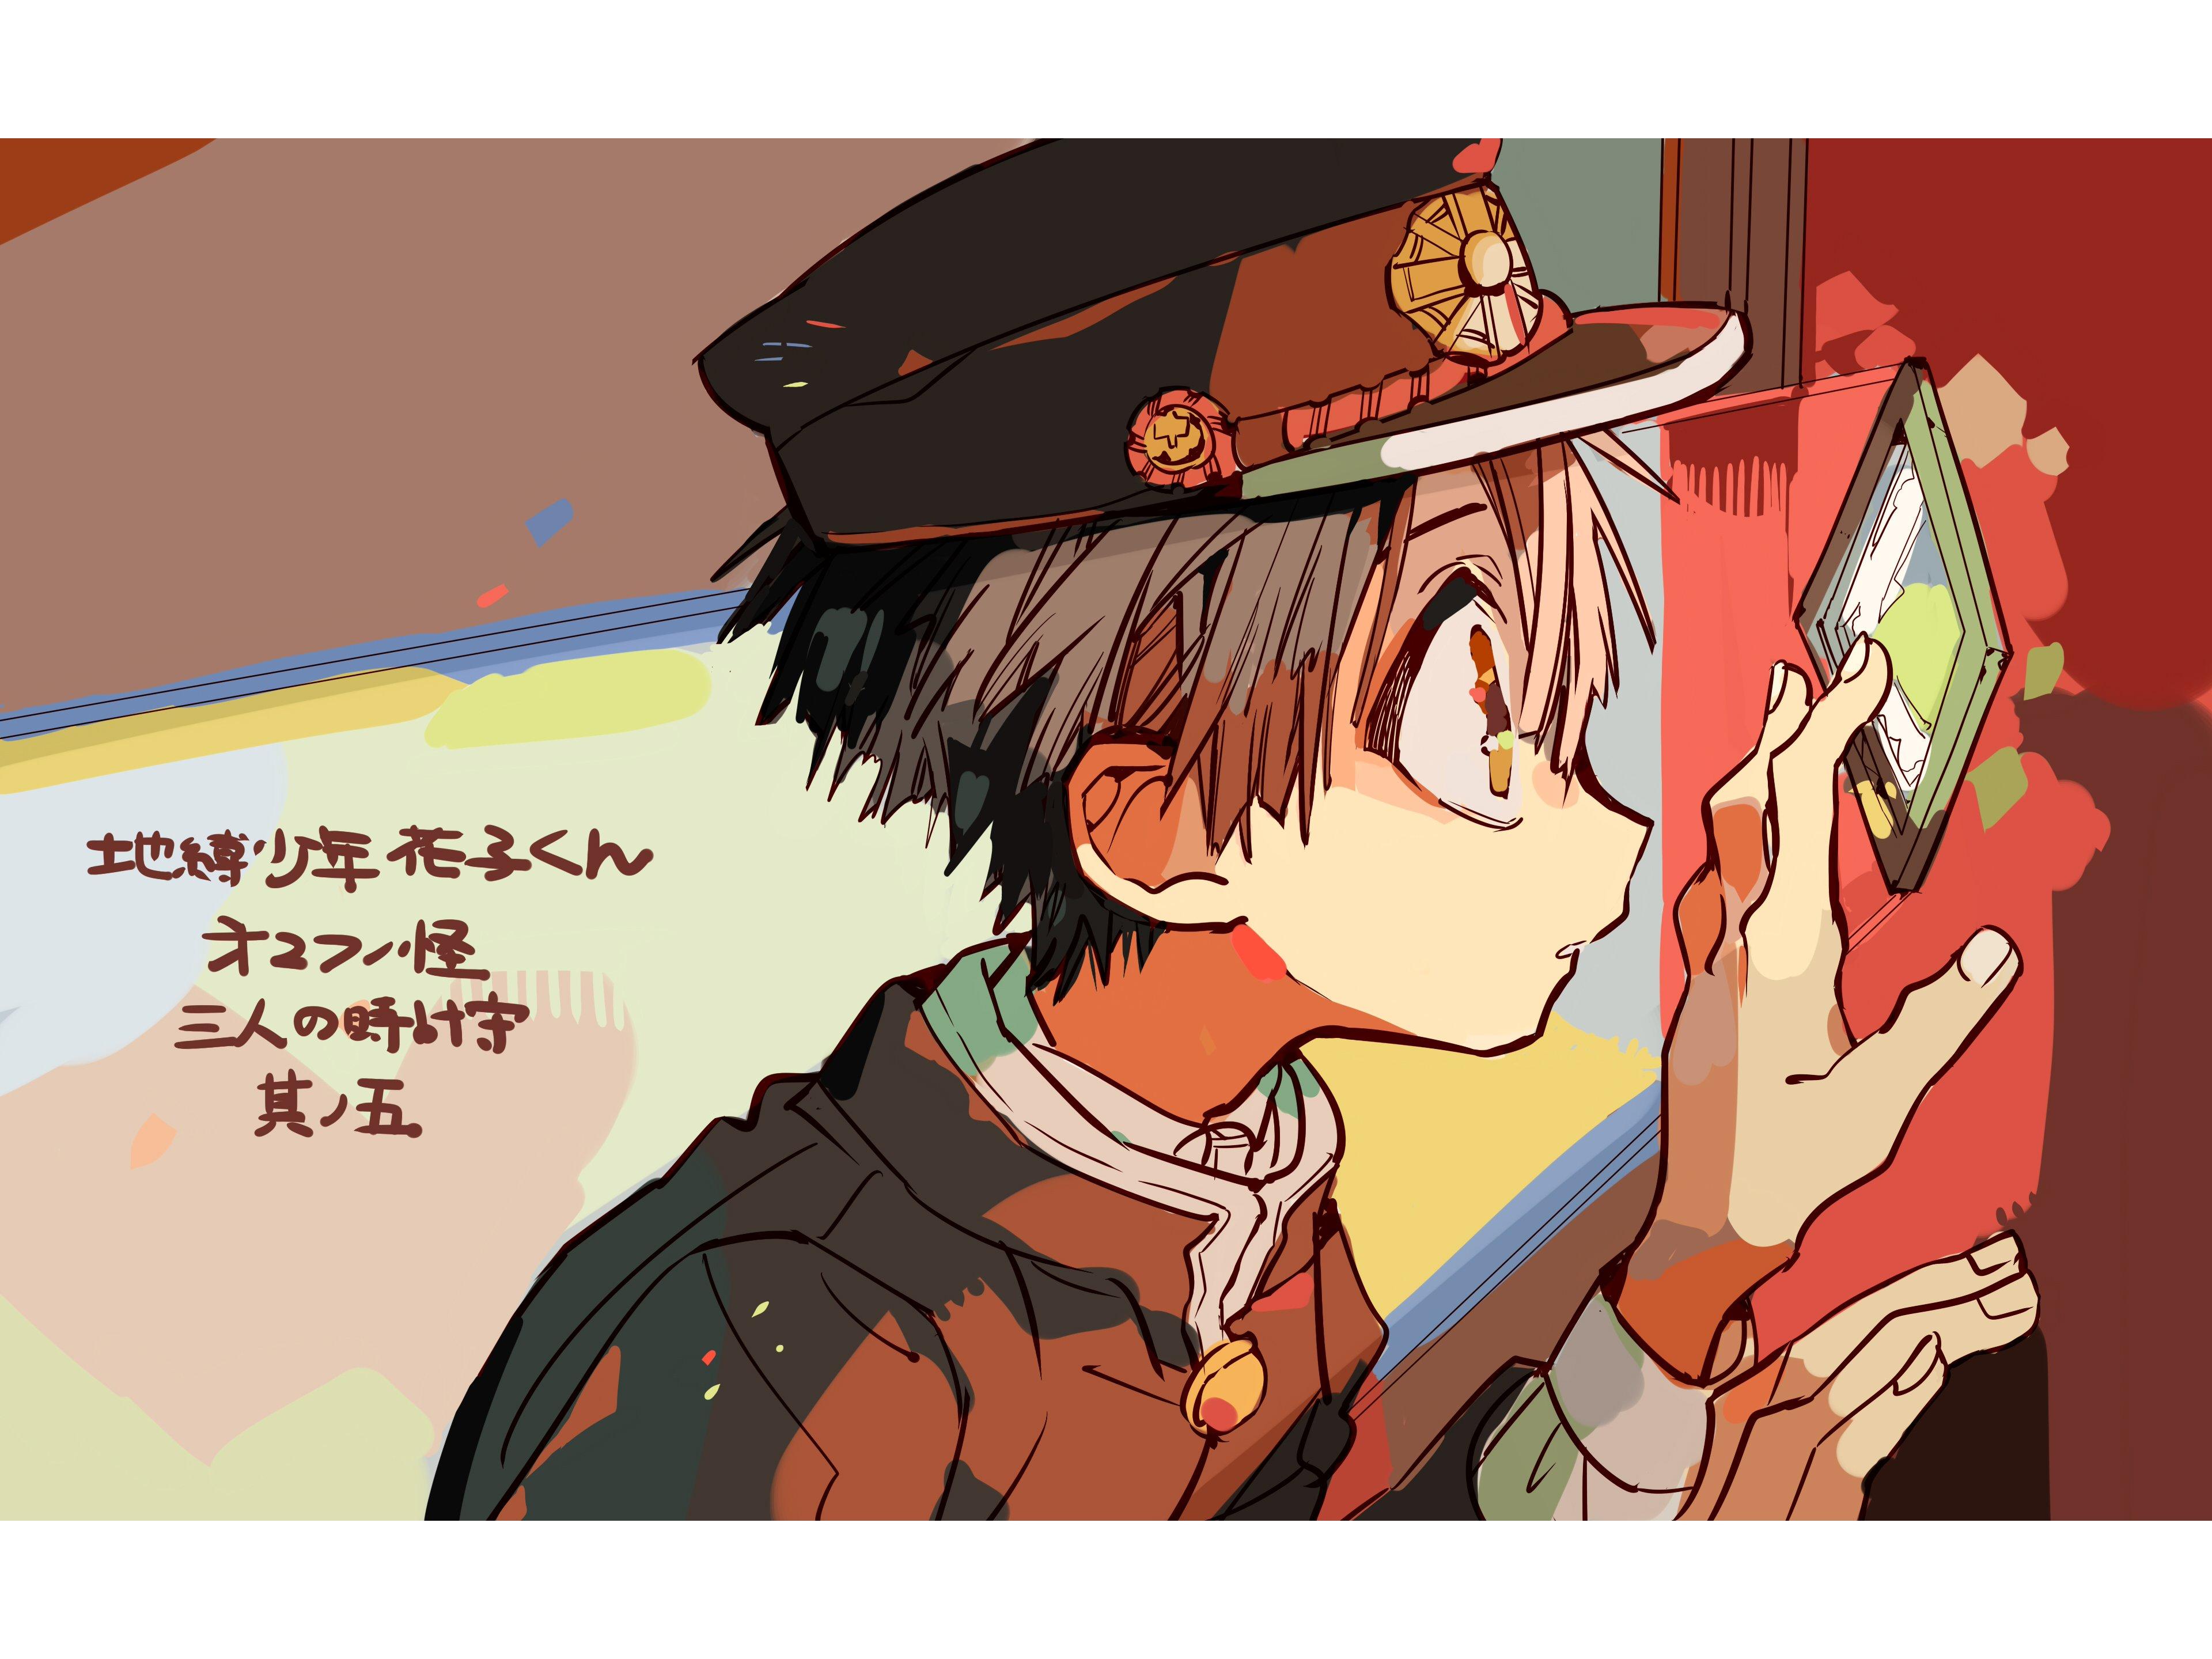 HD Wallpaper Anime Image Board